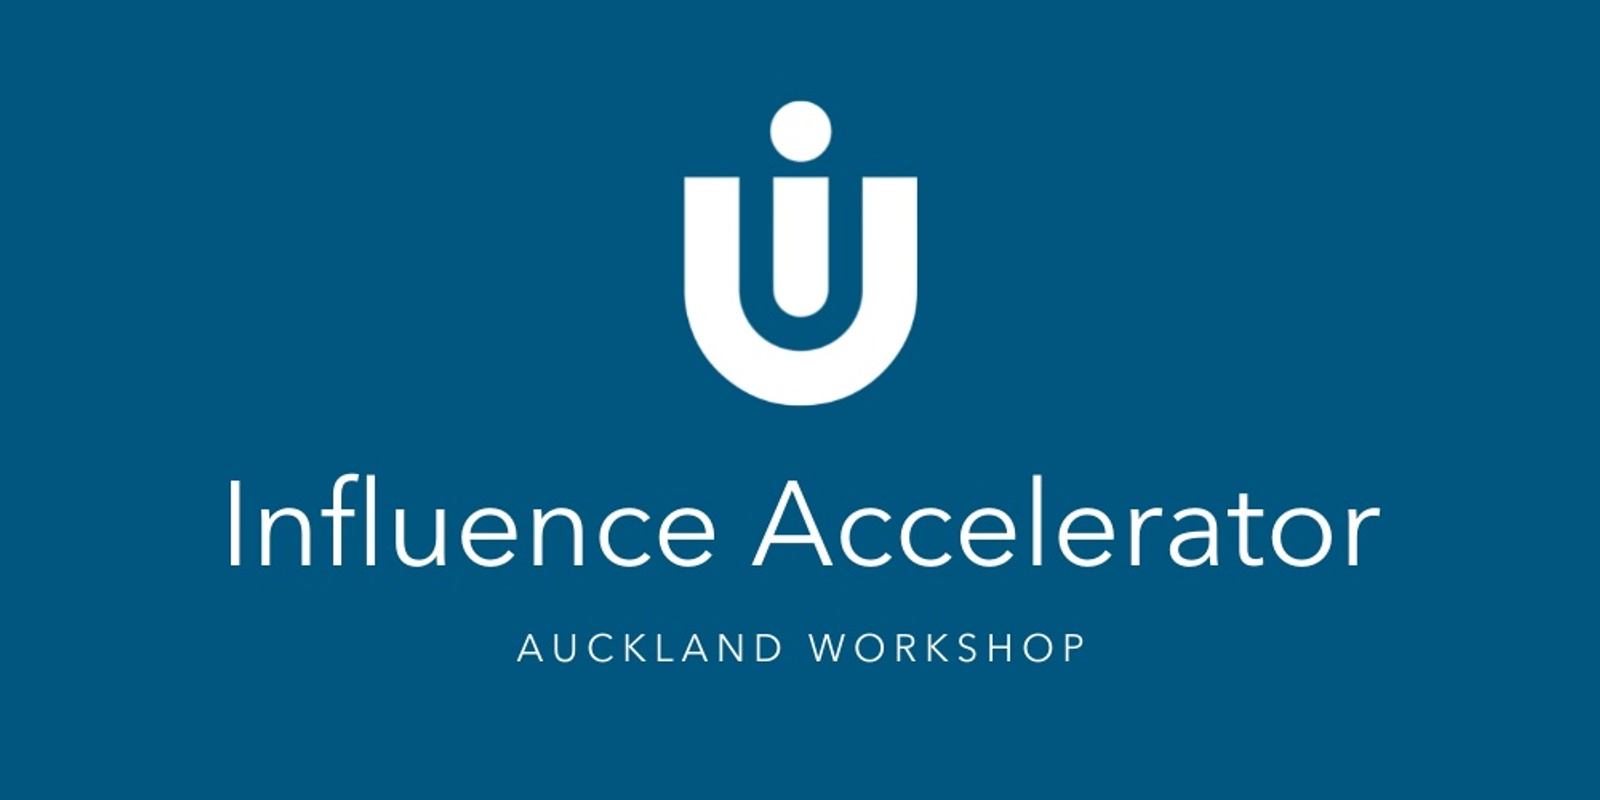 Influential U Workshop: Auckland Influence Accelerator June 2, 2022